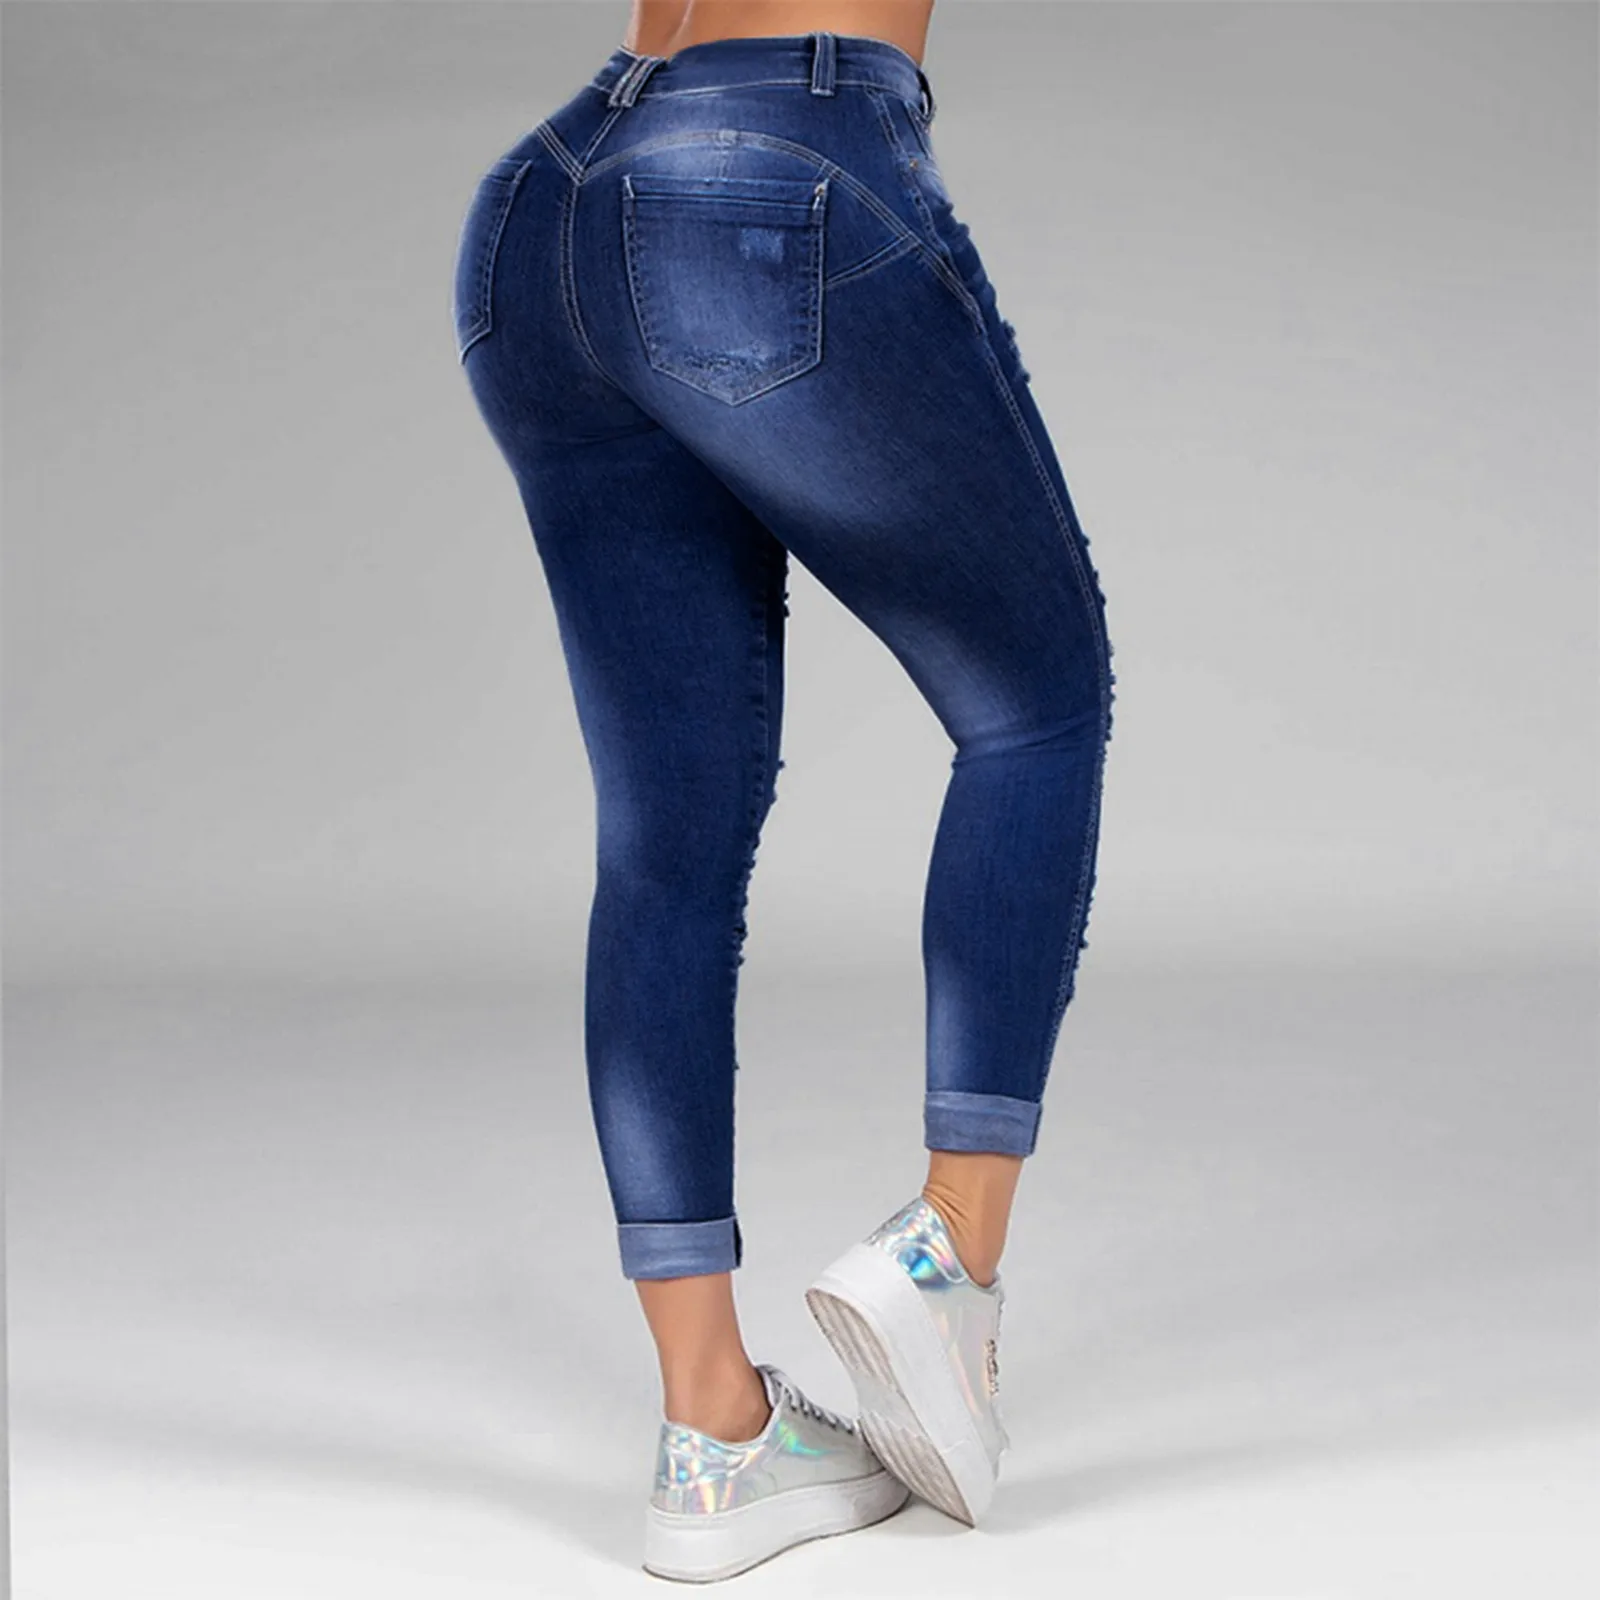 size 5xl 6xl calças lavadas jeans denim